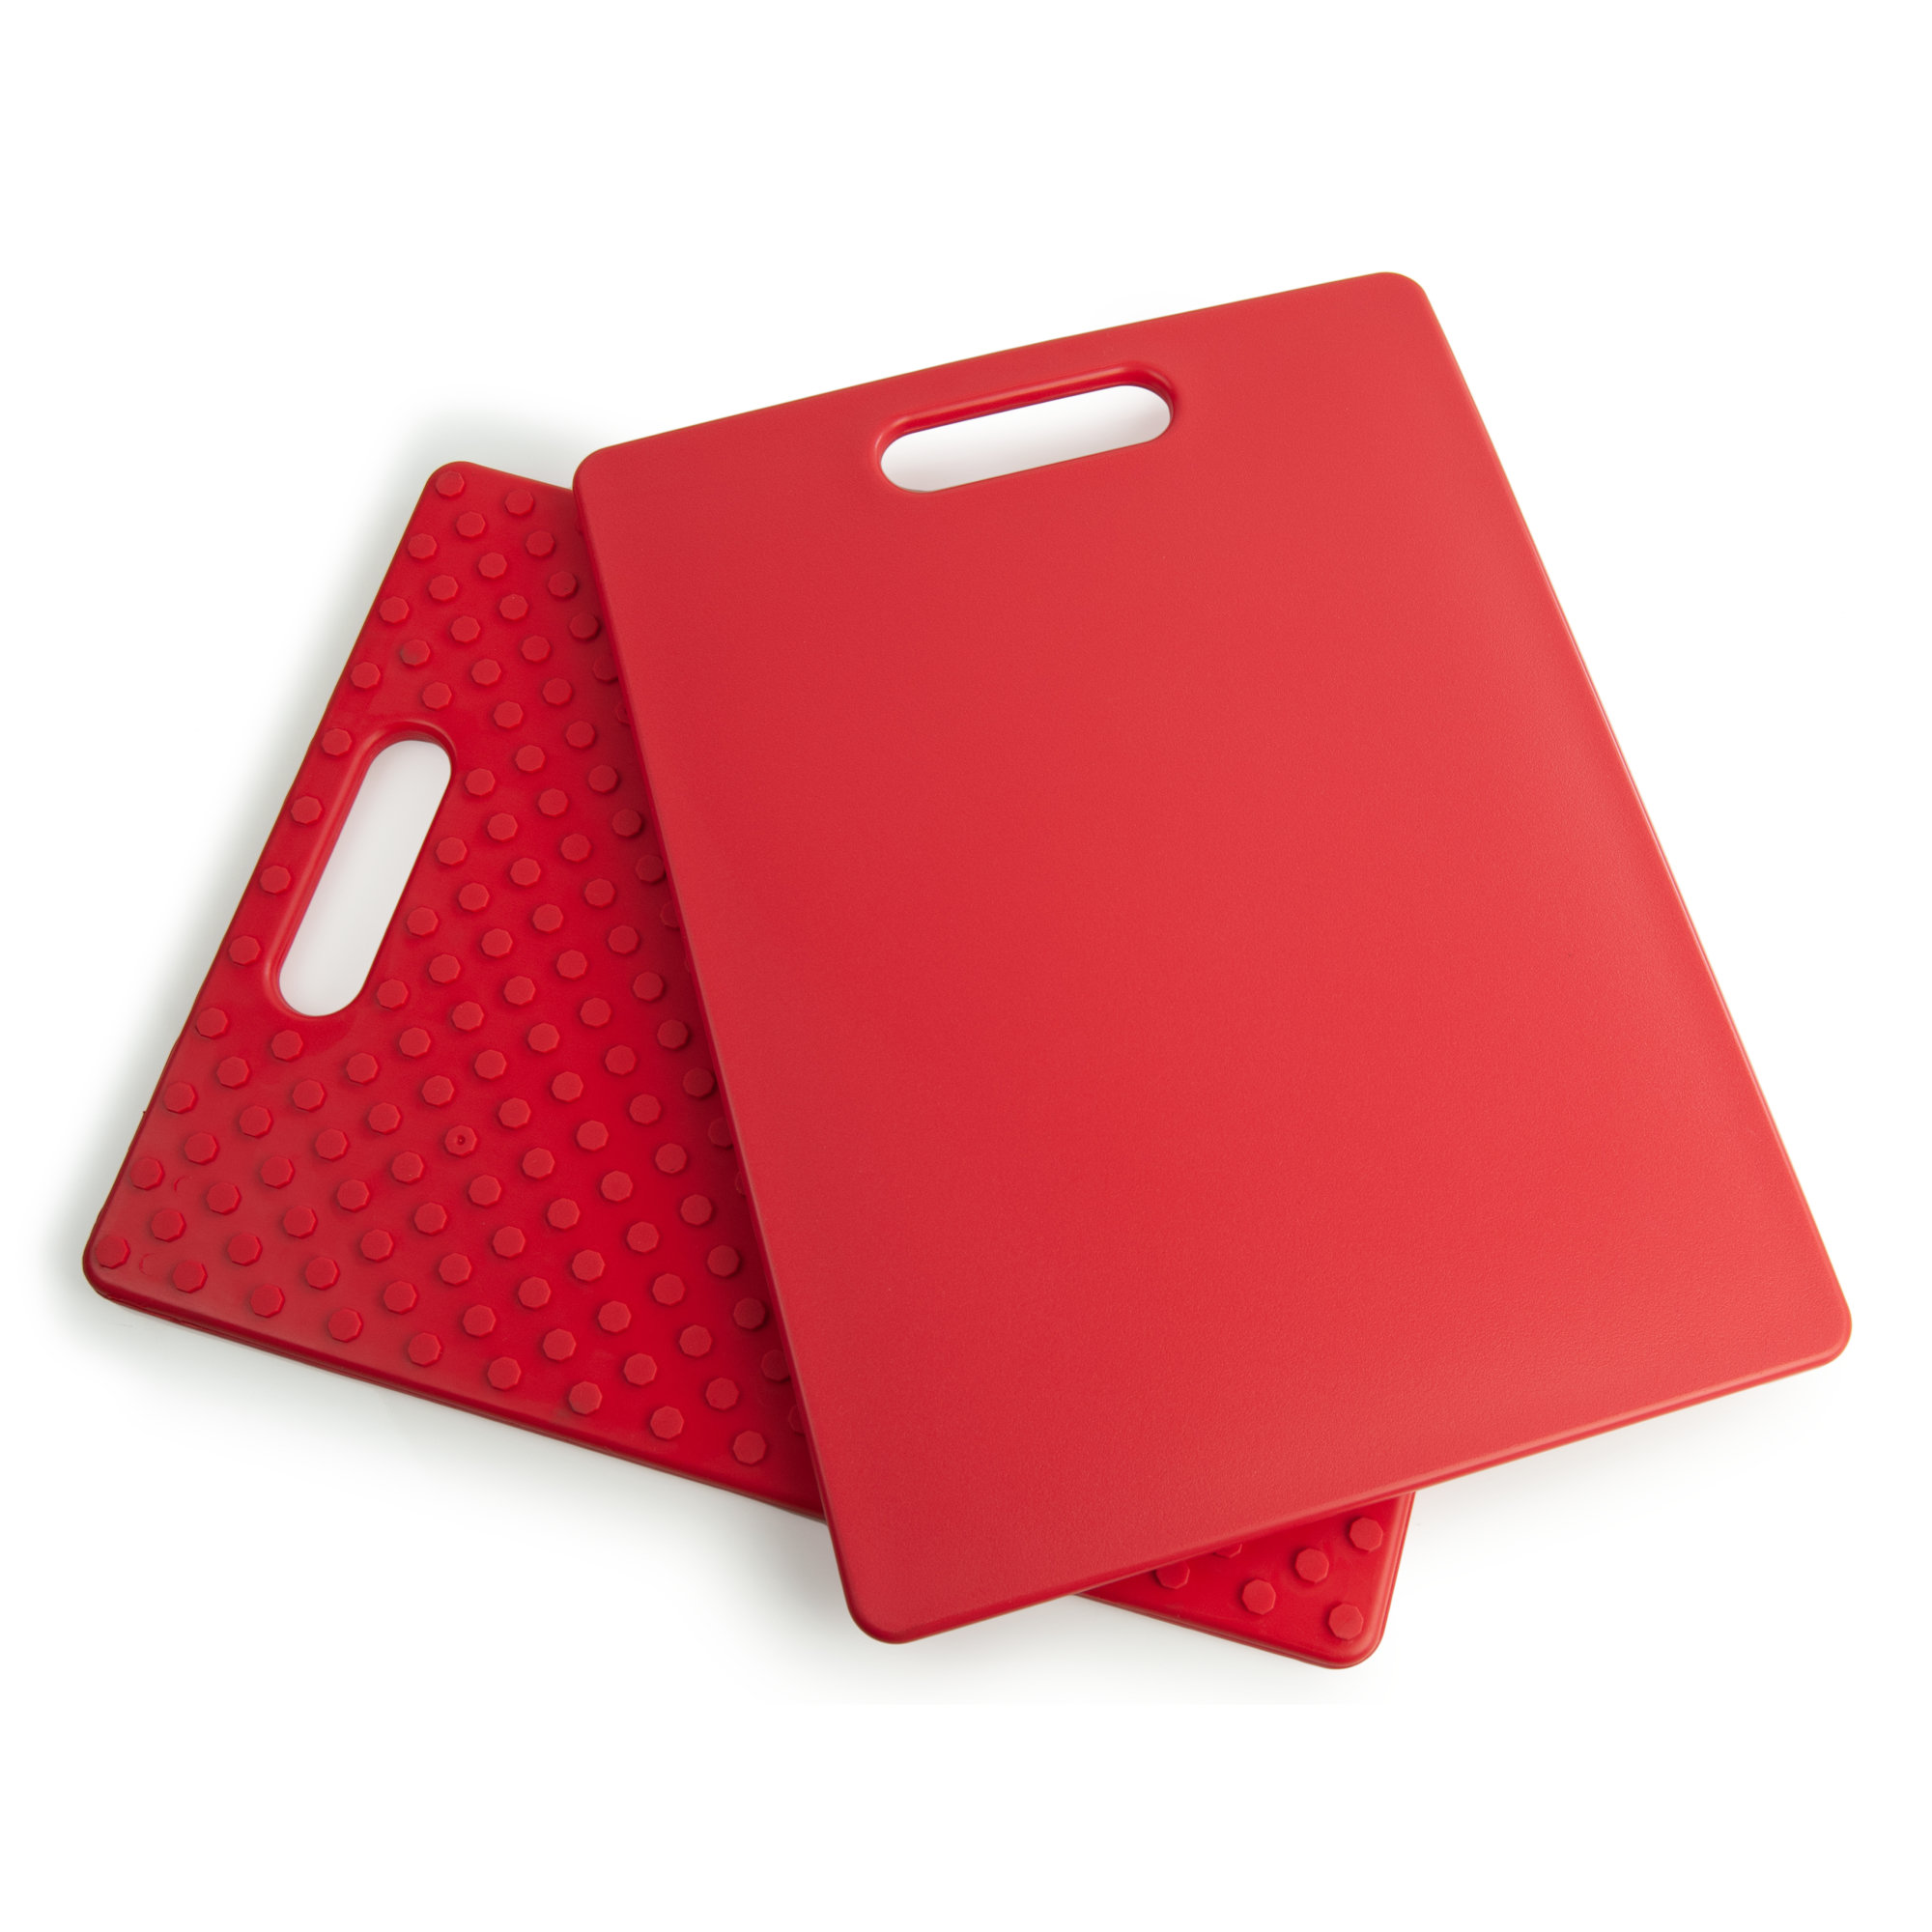 Farberware Large Plastic Cutting Board, 11x14-Inch, Red